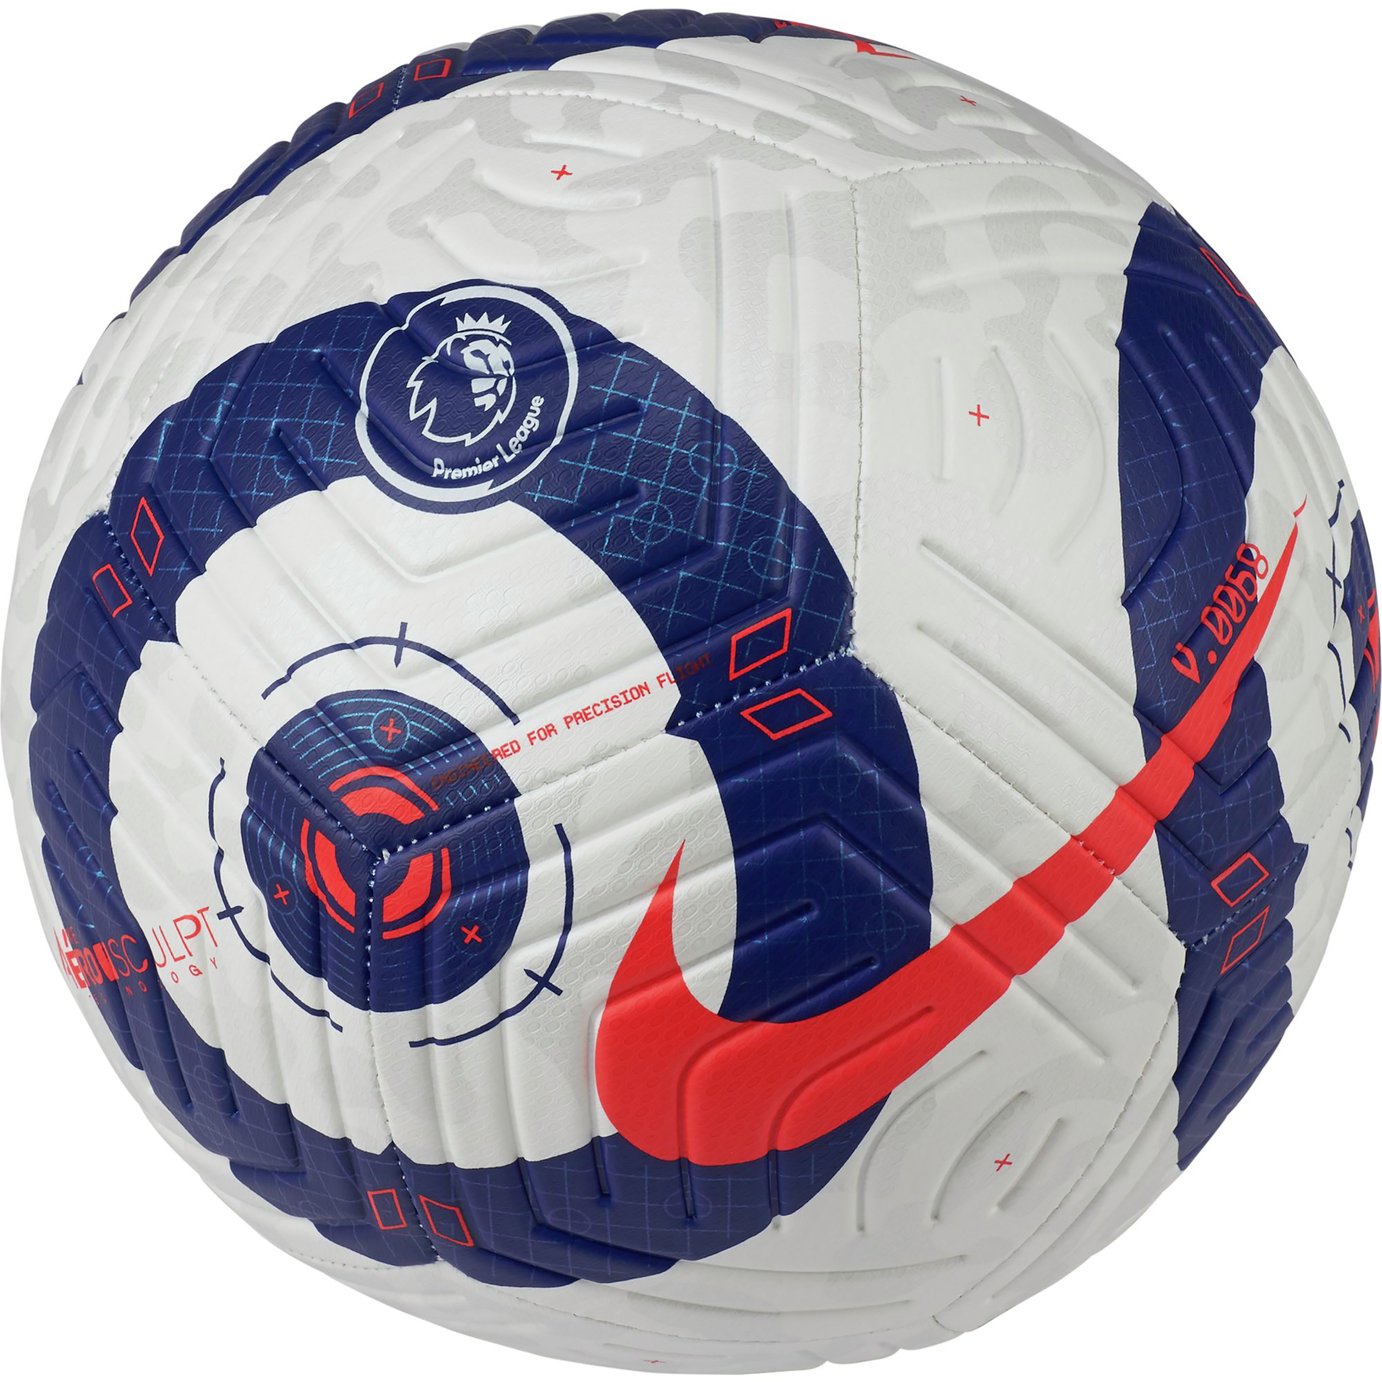 nike strike premier league soccer ball size 5